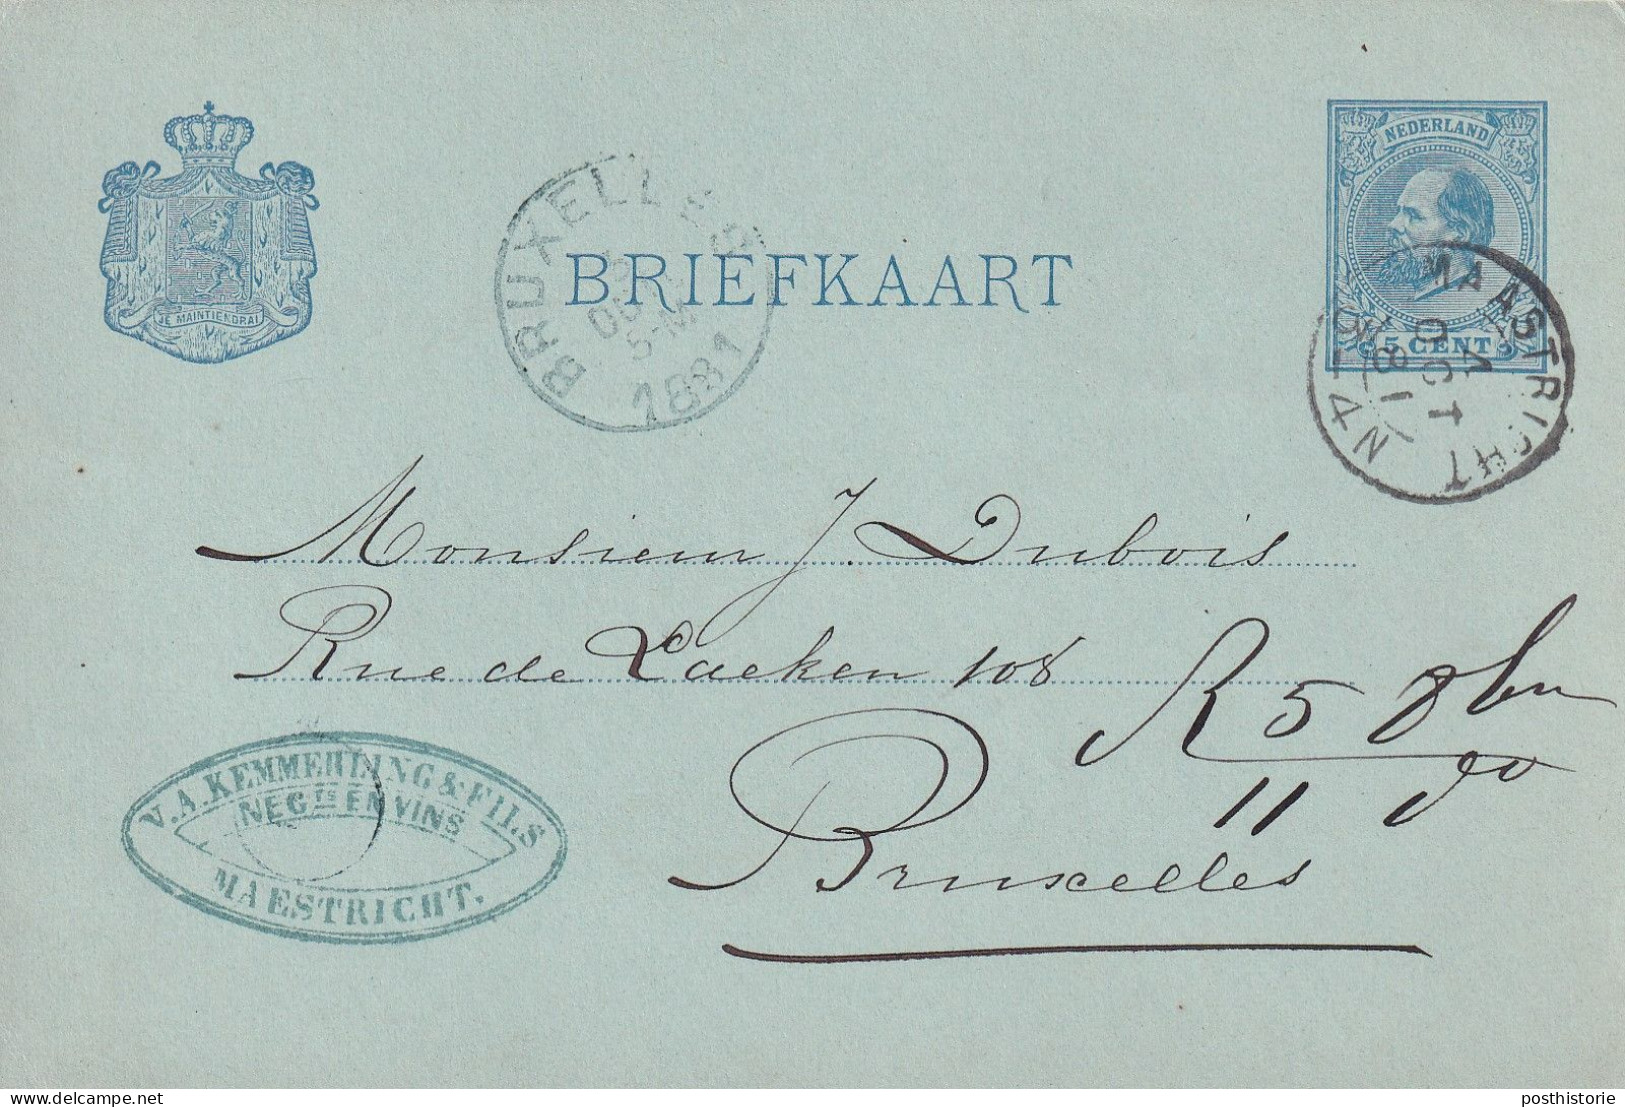 Briefkaart Firmastempel 4 Okt 1881 Maastricht (kleinrond) Naar Brussel - Storia Postale